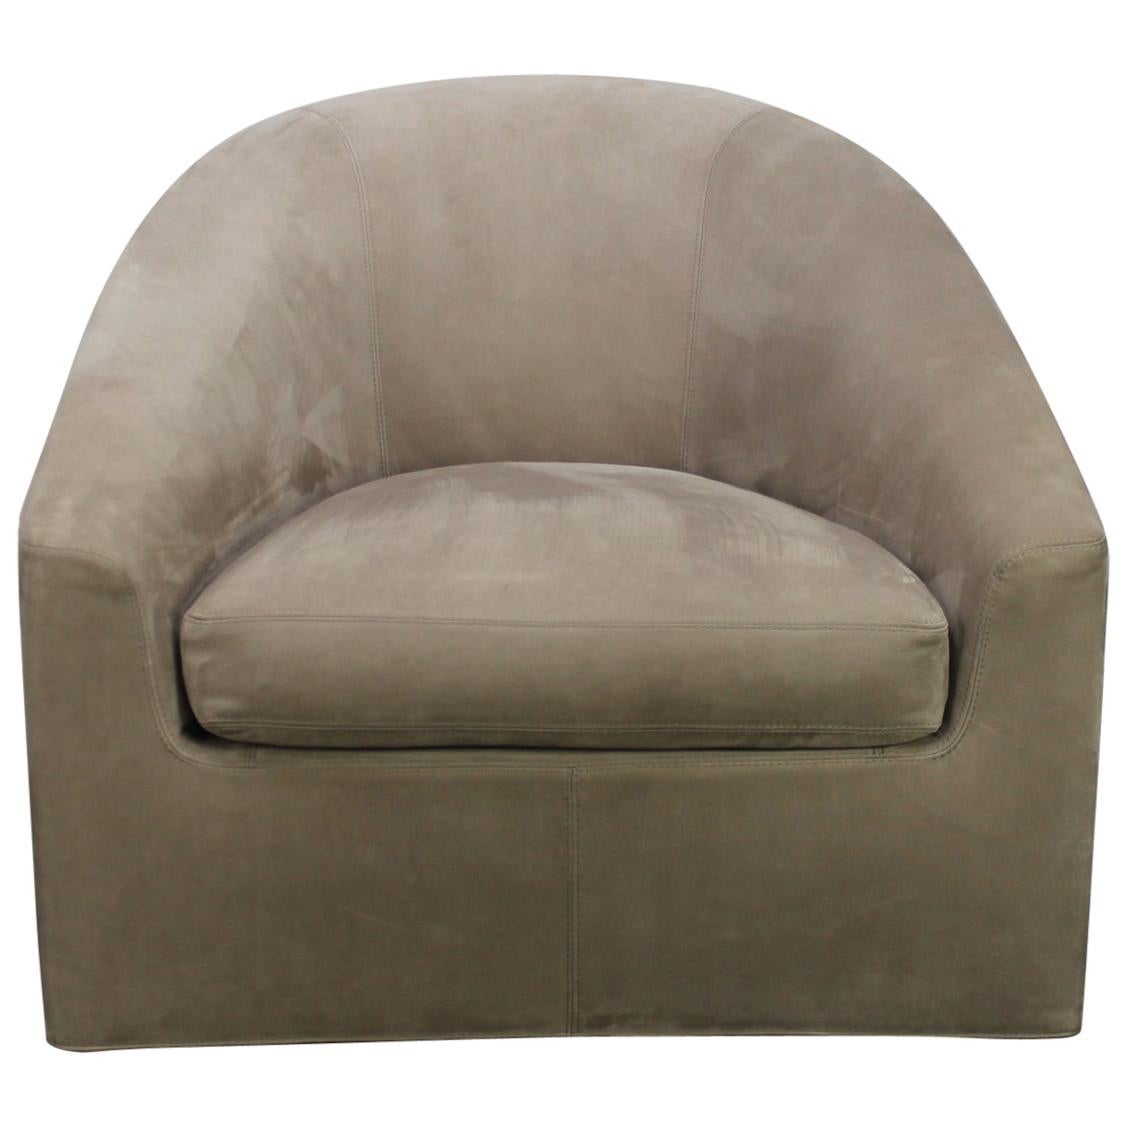 Minotti “Quinn” Swivel-Base Armchair in Suede Leather by Rodolfo Dordoni